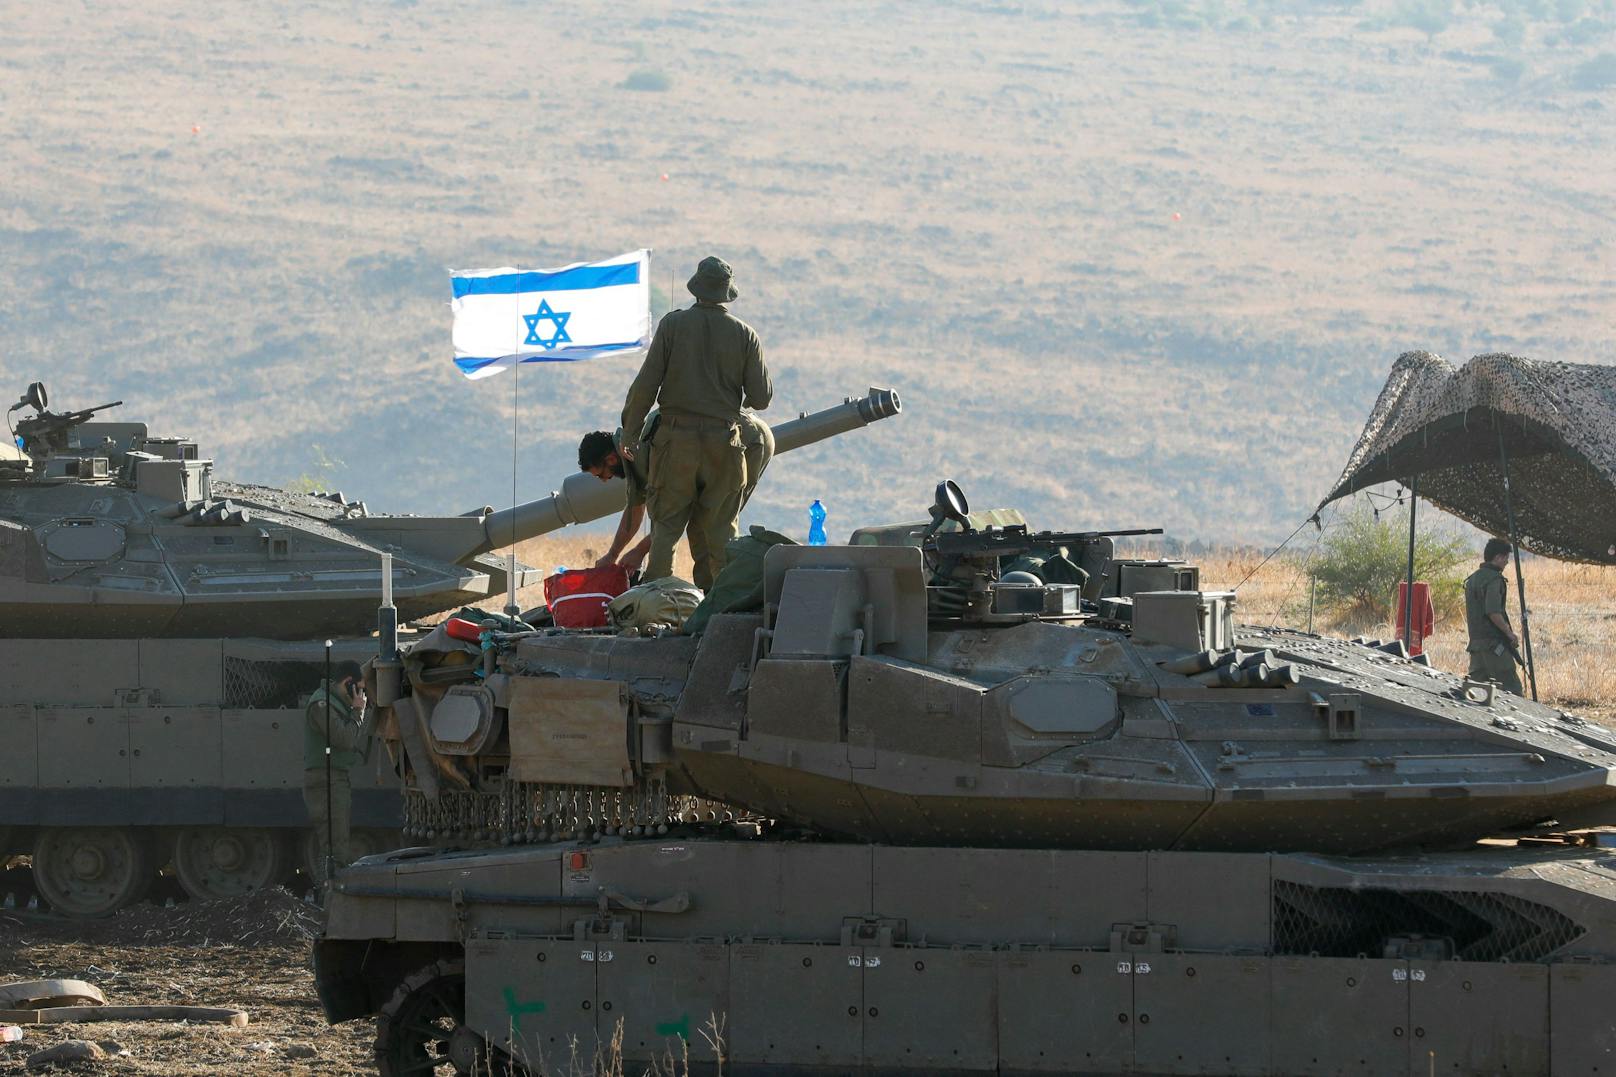 Jetzt greift Hisbollah an – erstes Todesopfer in Israel